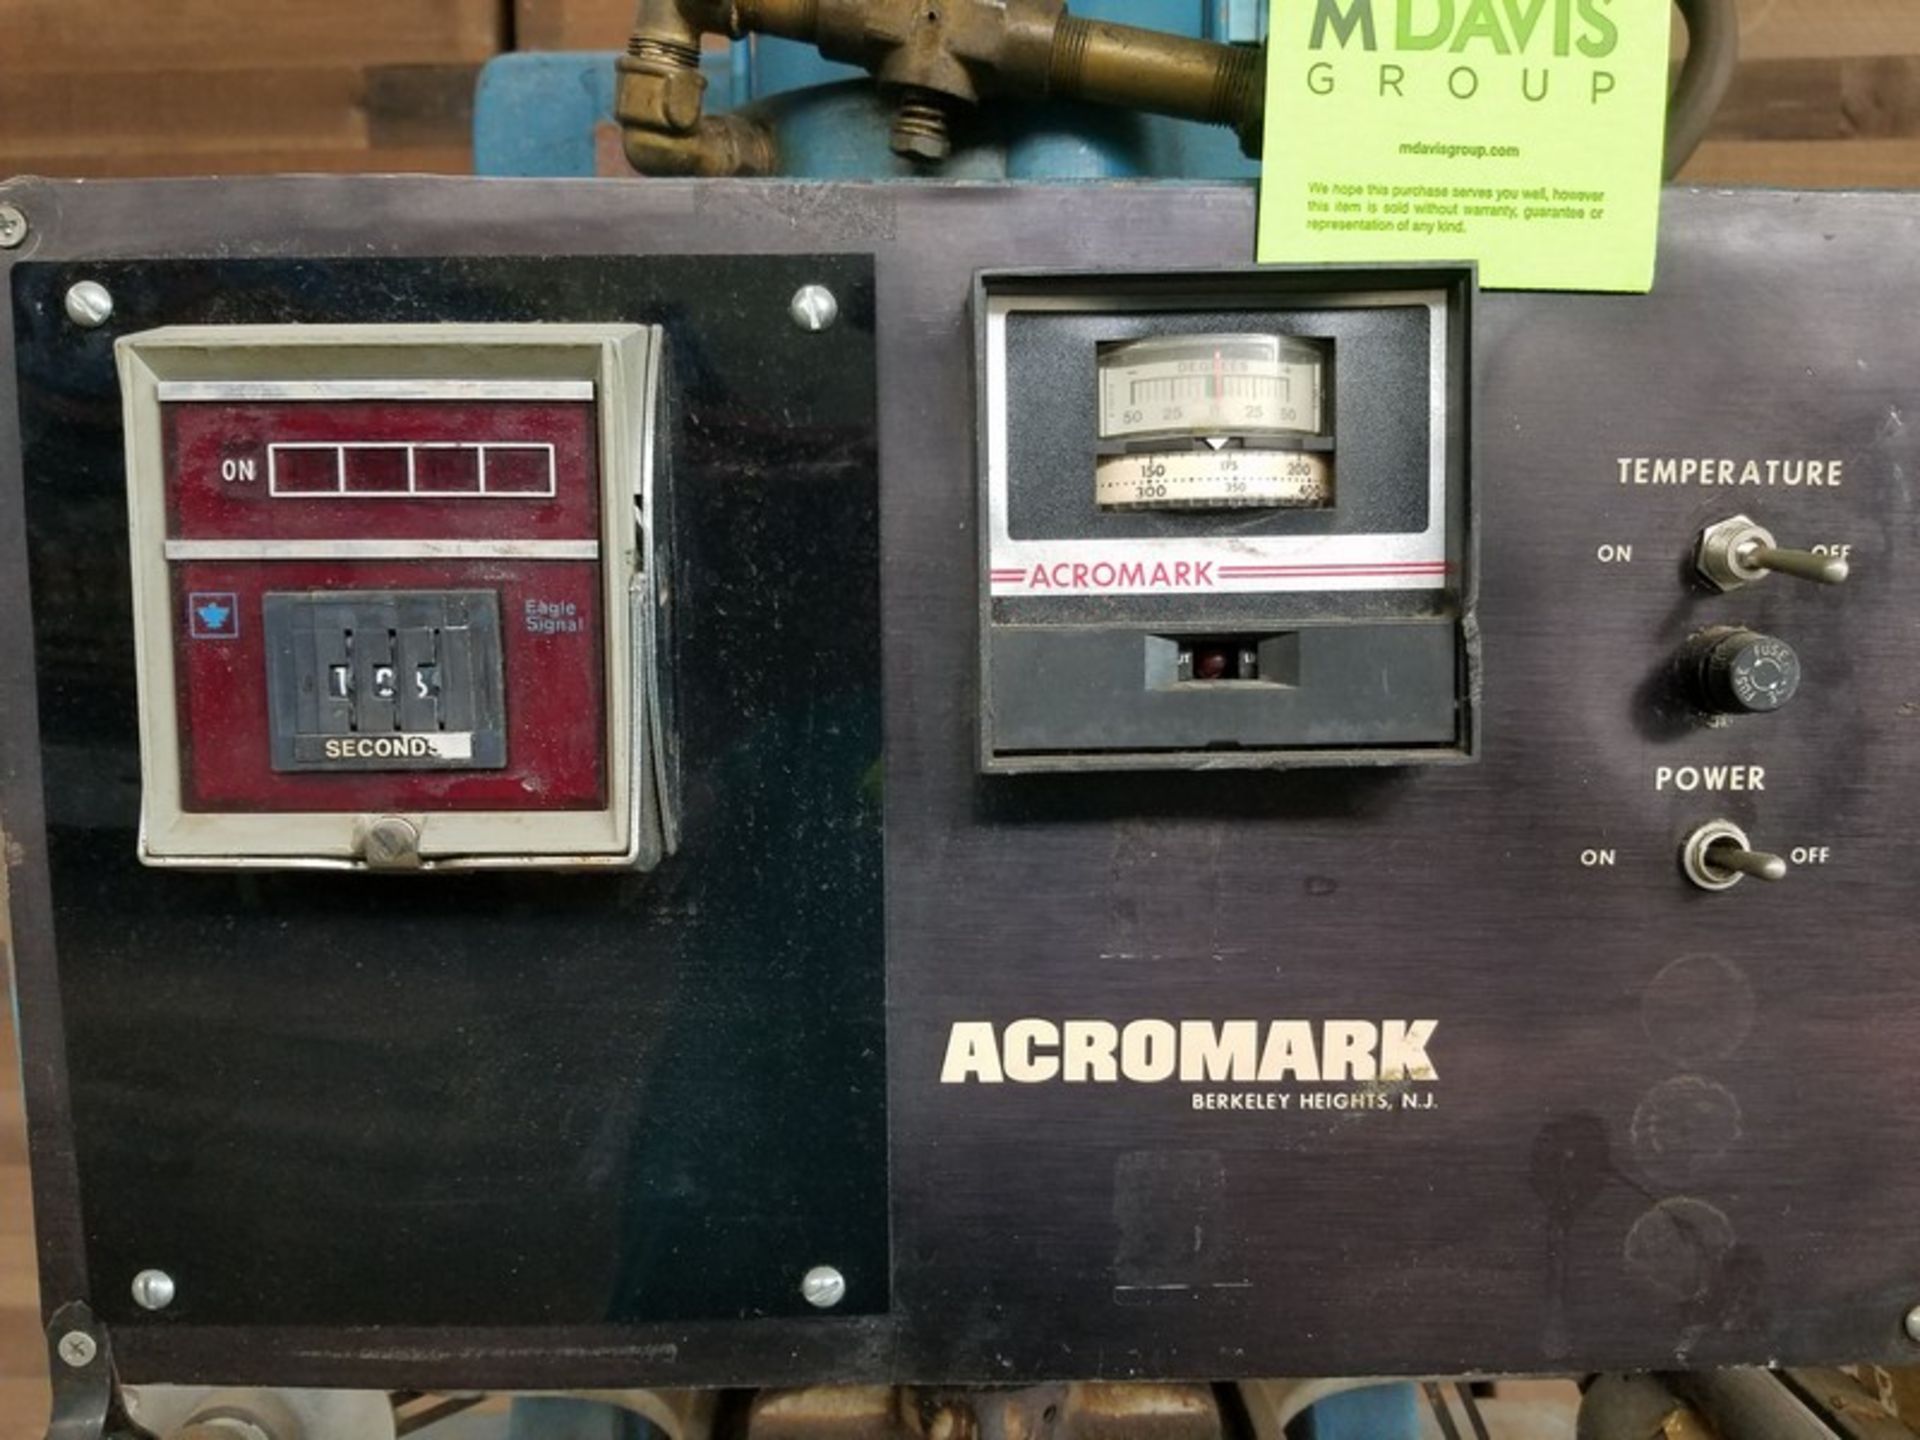 Aeromark 610-40 hot foil stamping press, serial # 85946, volt 120, plat size: 7 x 8 (Handling, - Image 4 of 5